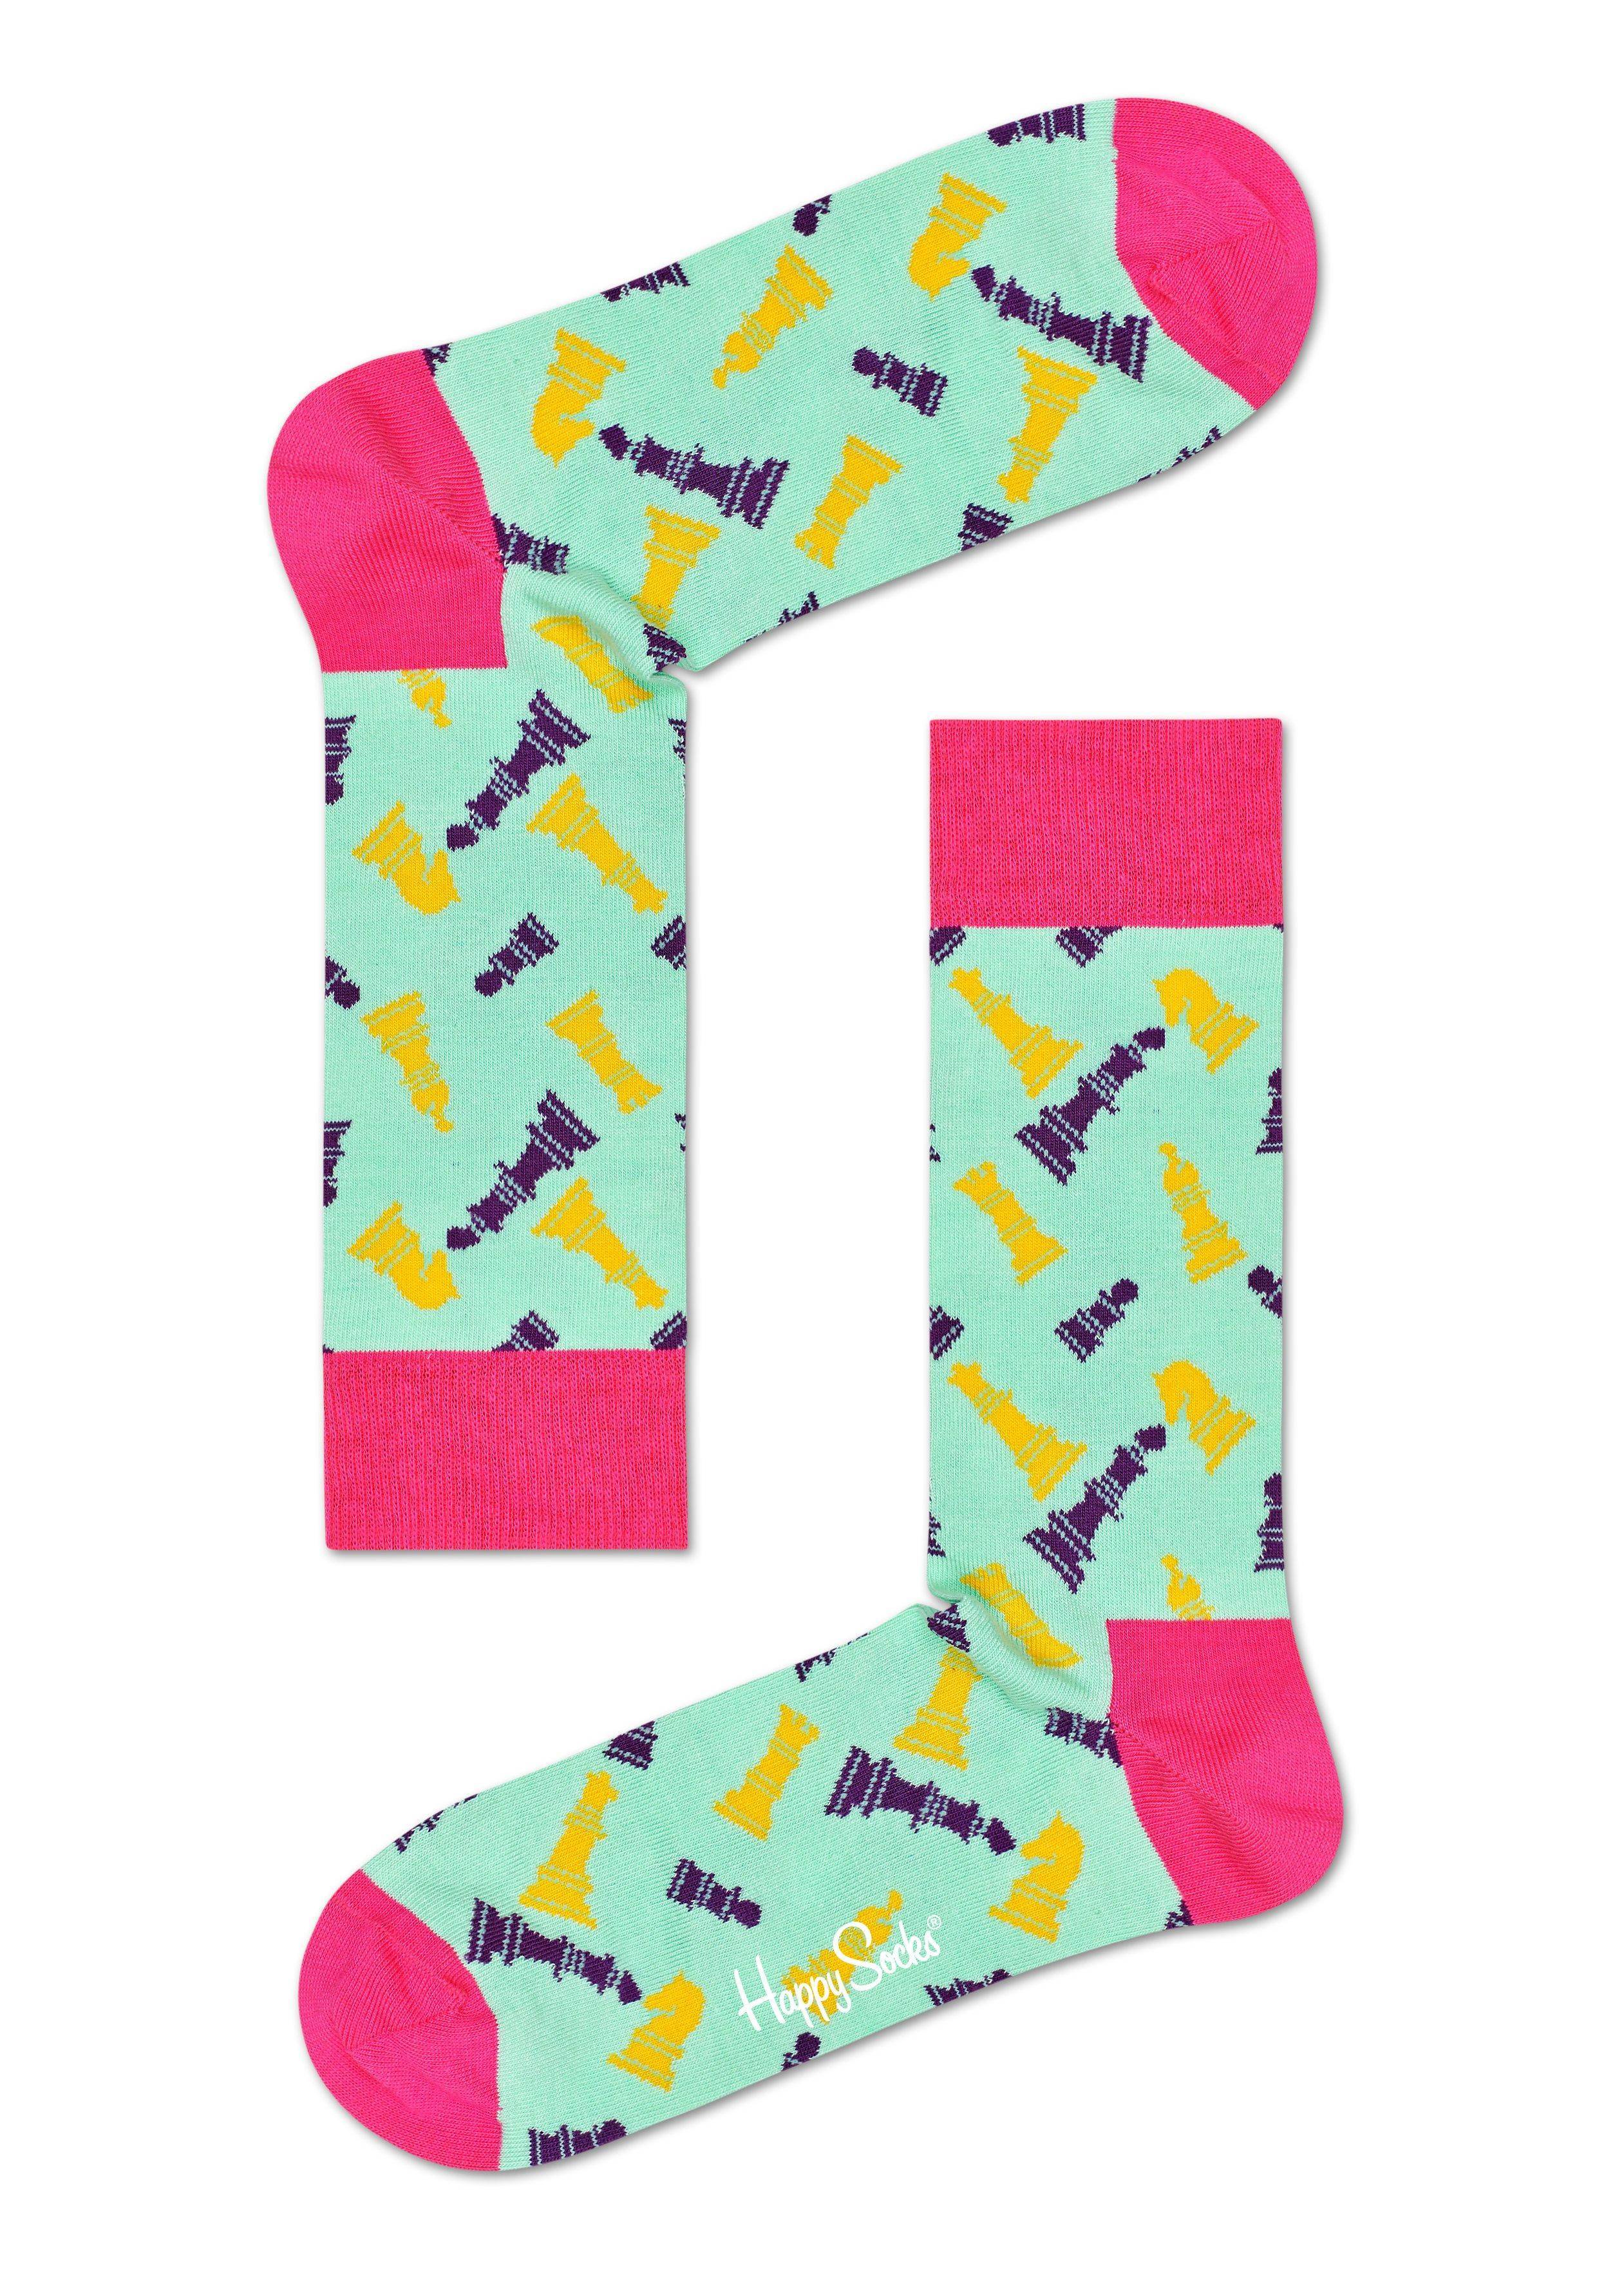 Носки Happy Socks. Happy Socks набор. Сокс игра. Игра разноцветные носочки. Игра носочки